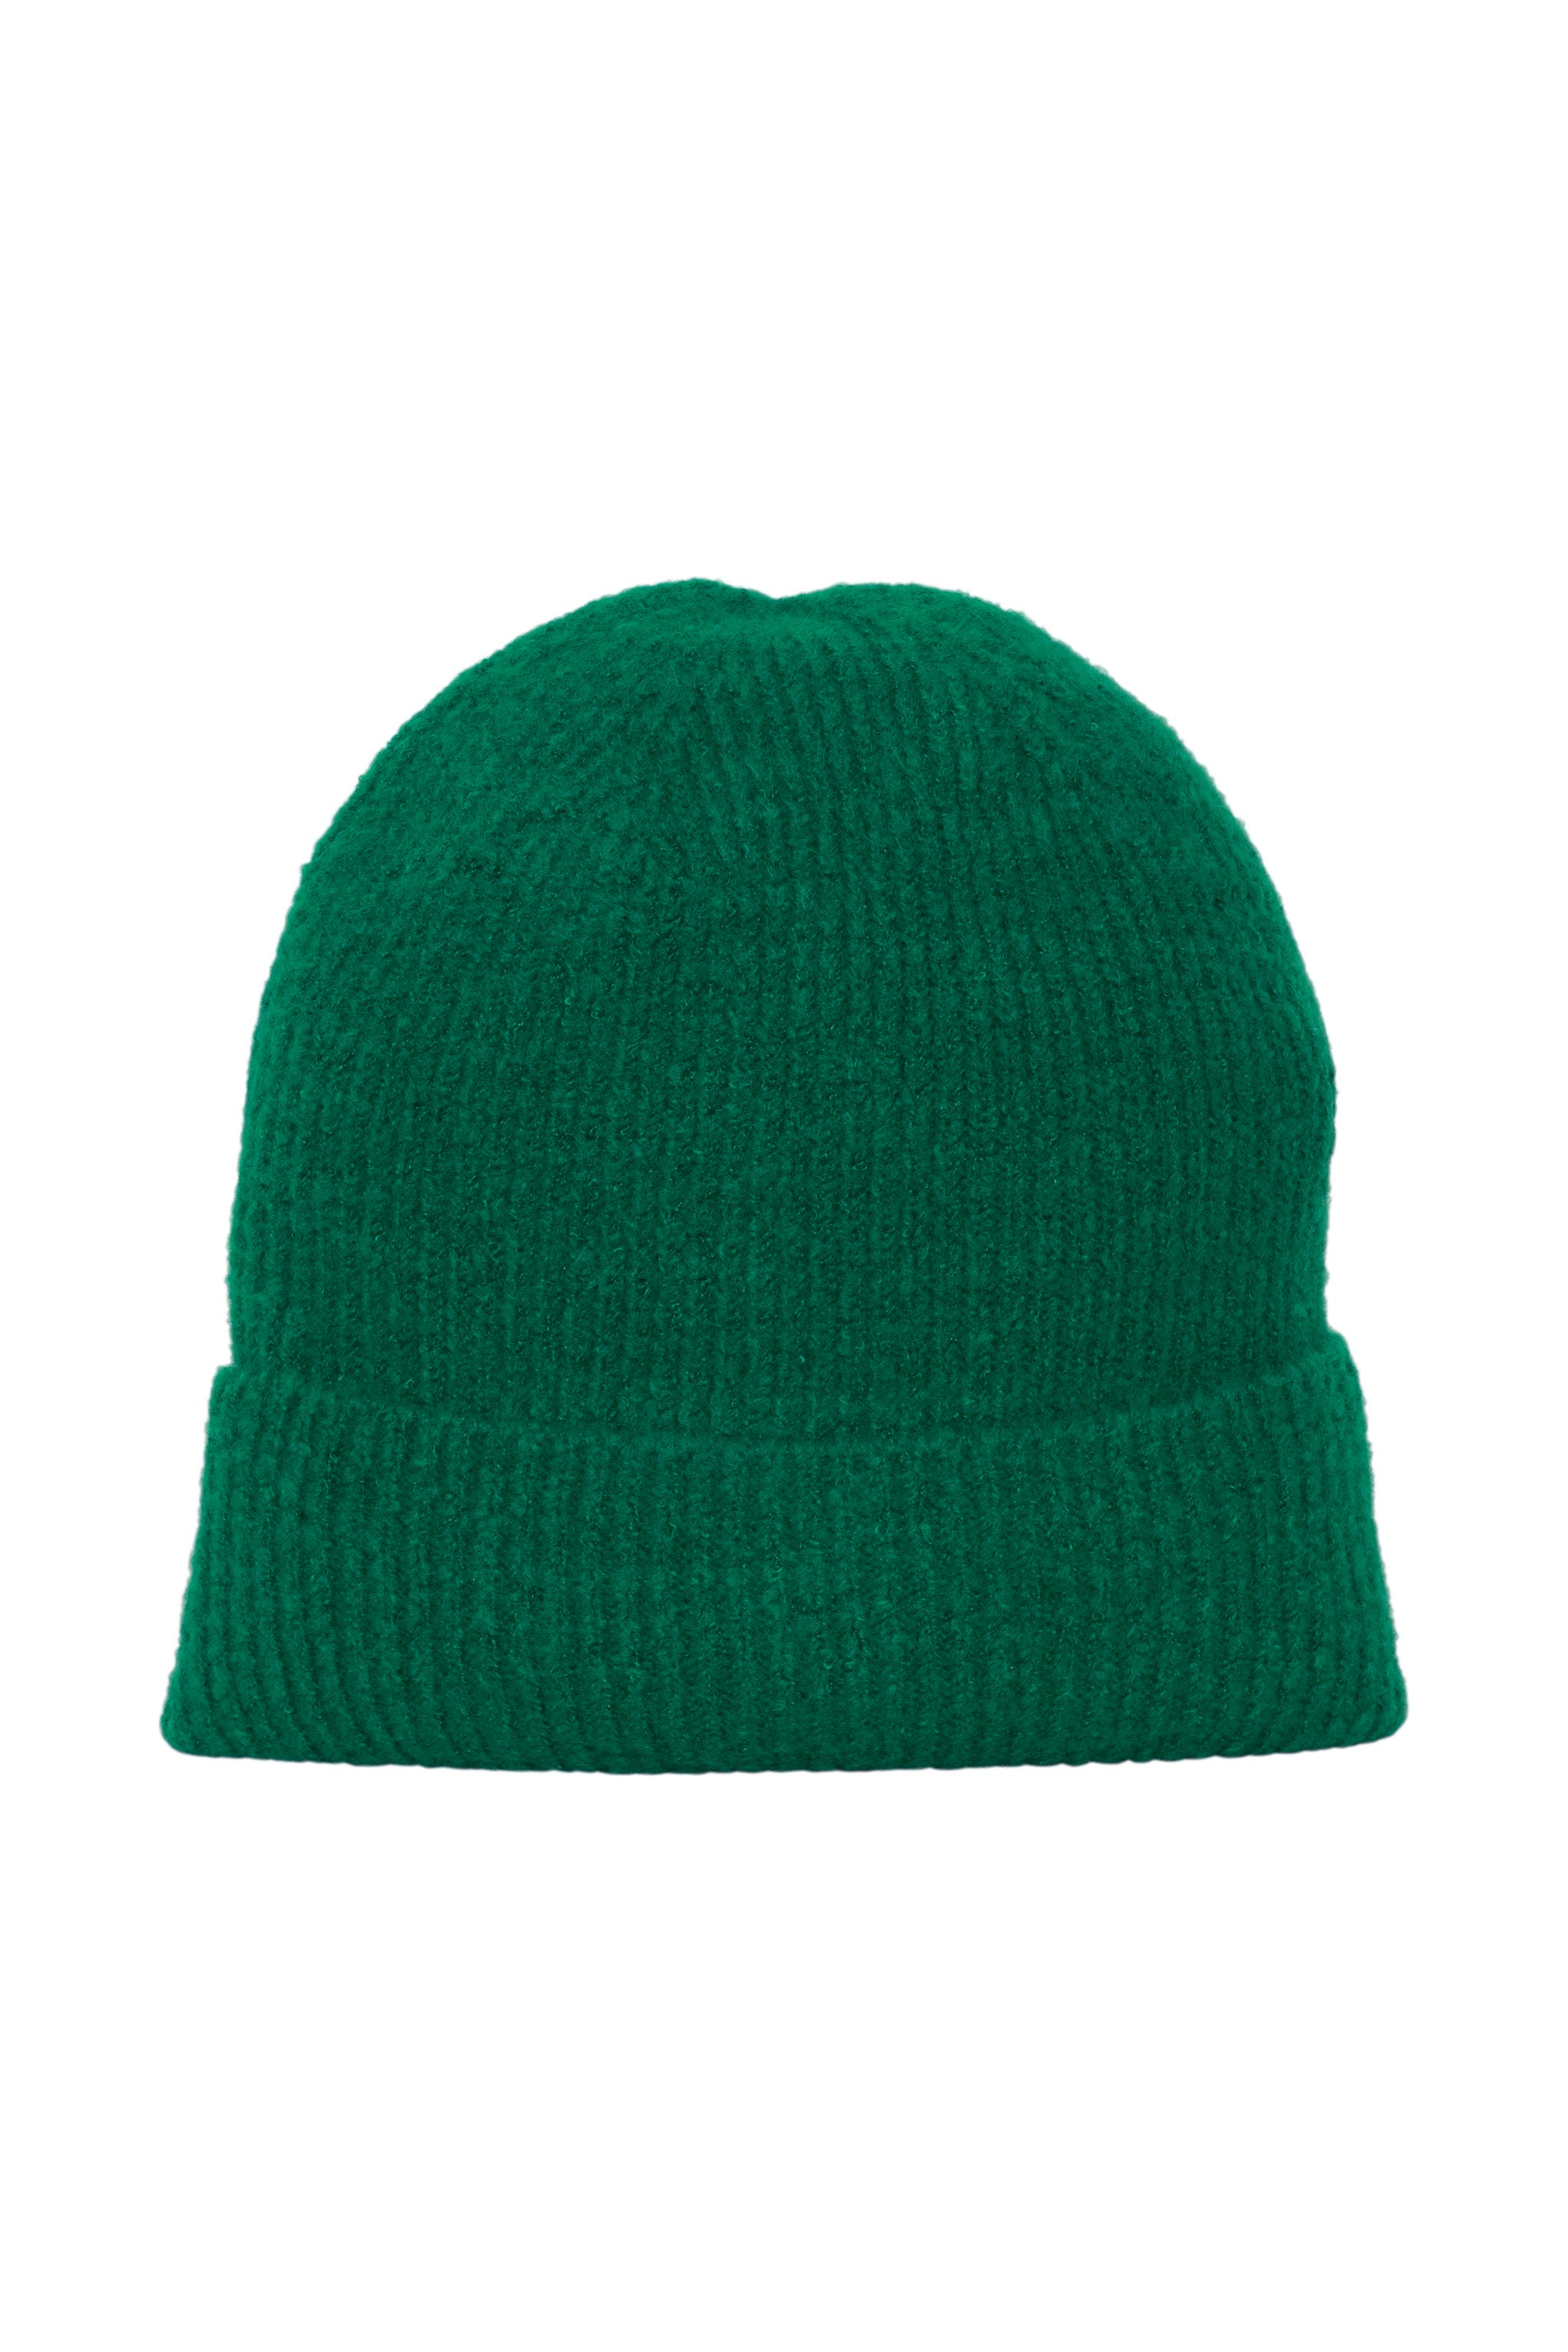 ICHI Ribbed Beanie Hat - Cadmium Green